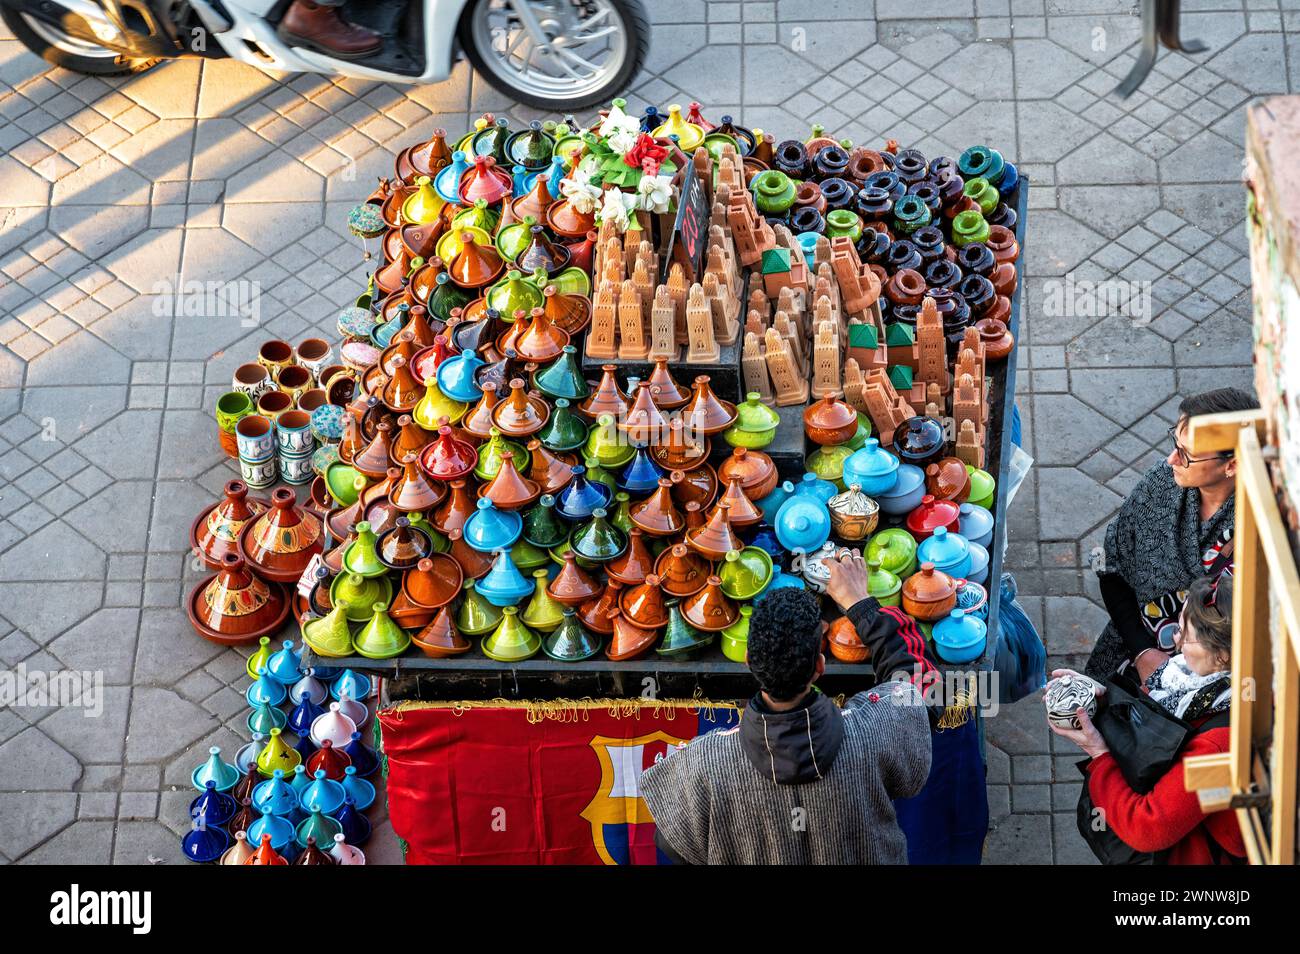 MARRAKESCH, MAROKKO - 7. MÄRZ 2022: Händler verkauft Souvenirs in Marrakesch, Marokko am 7. März 2022 Stockfoto